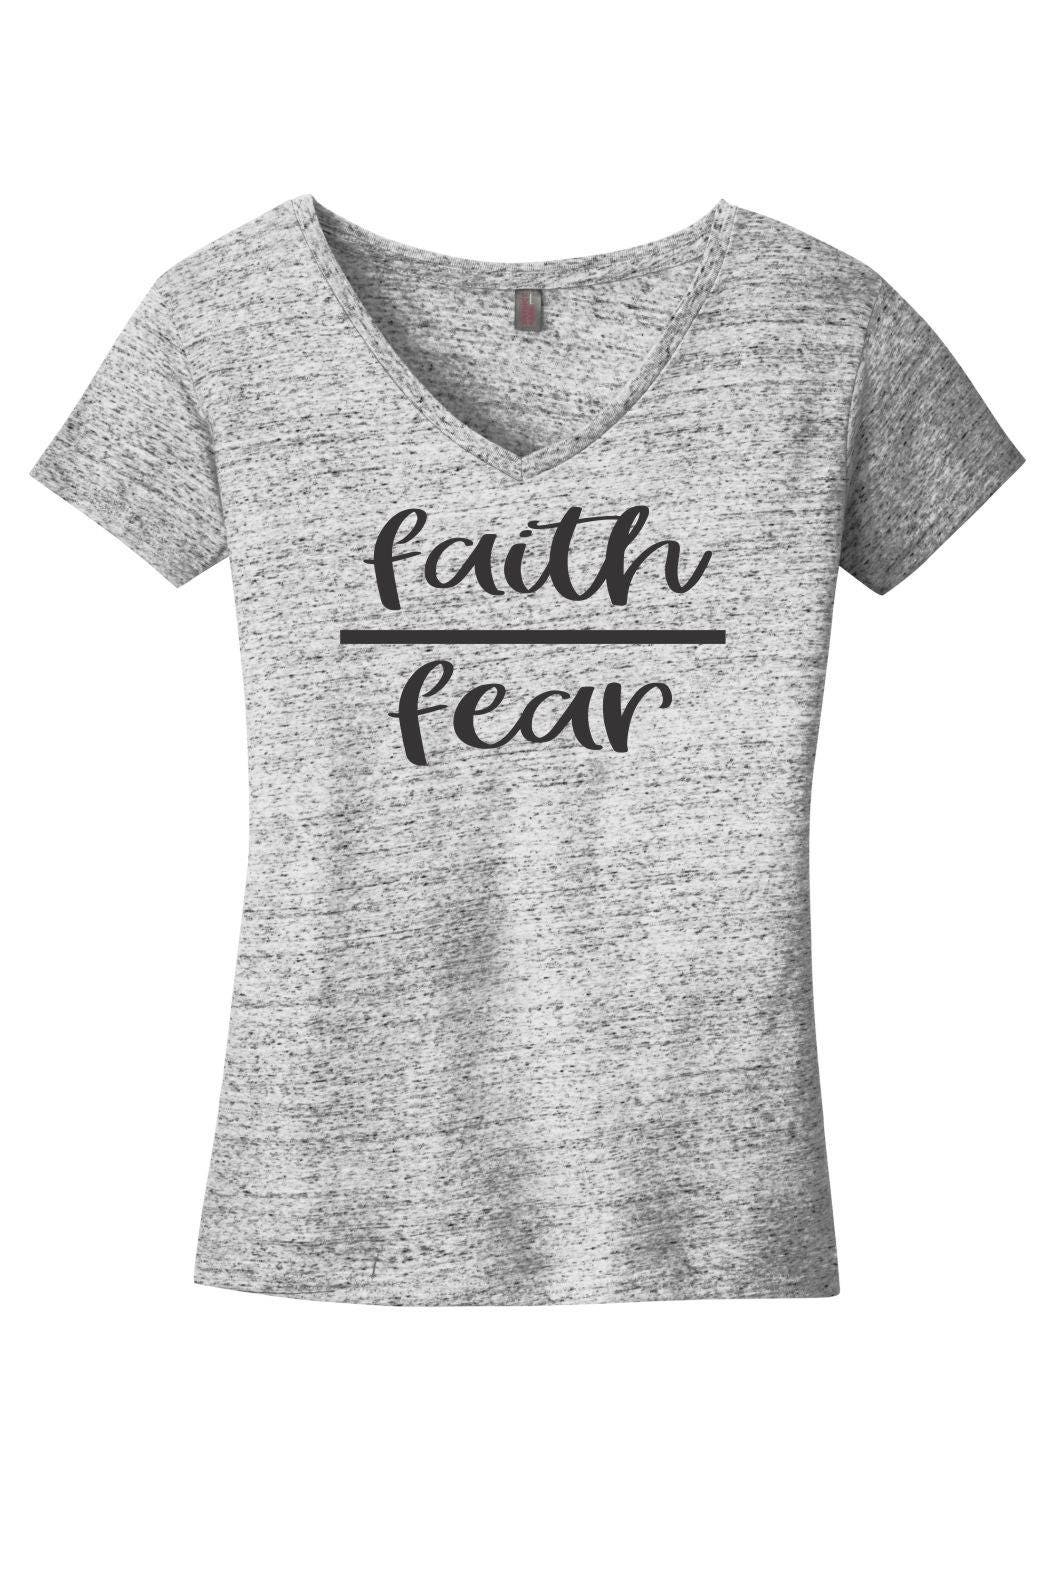 FAITH over FEAR Ladies Heather White V-neck T-Shirt Christian